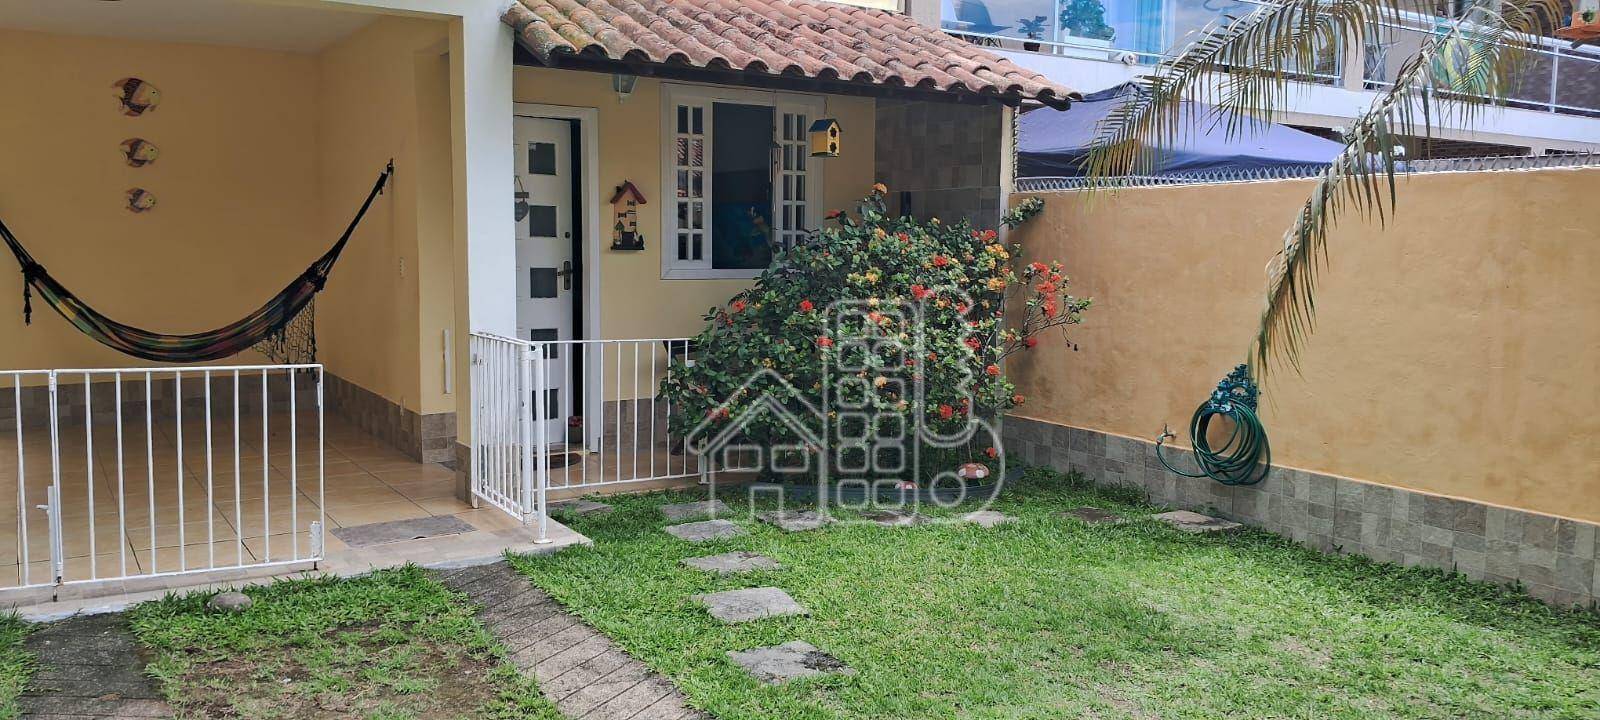 Casa à venda, 120 m² por R$ 649.000,99 - Serra Grande - Niterói/RJ